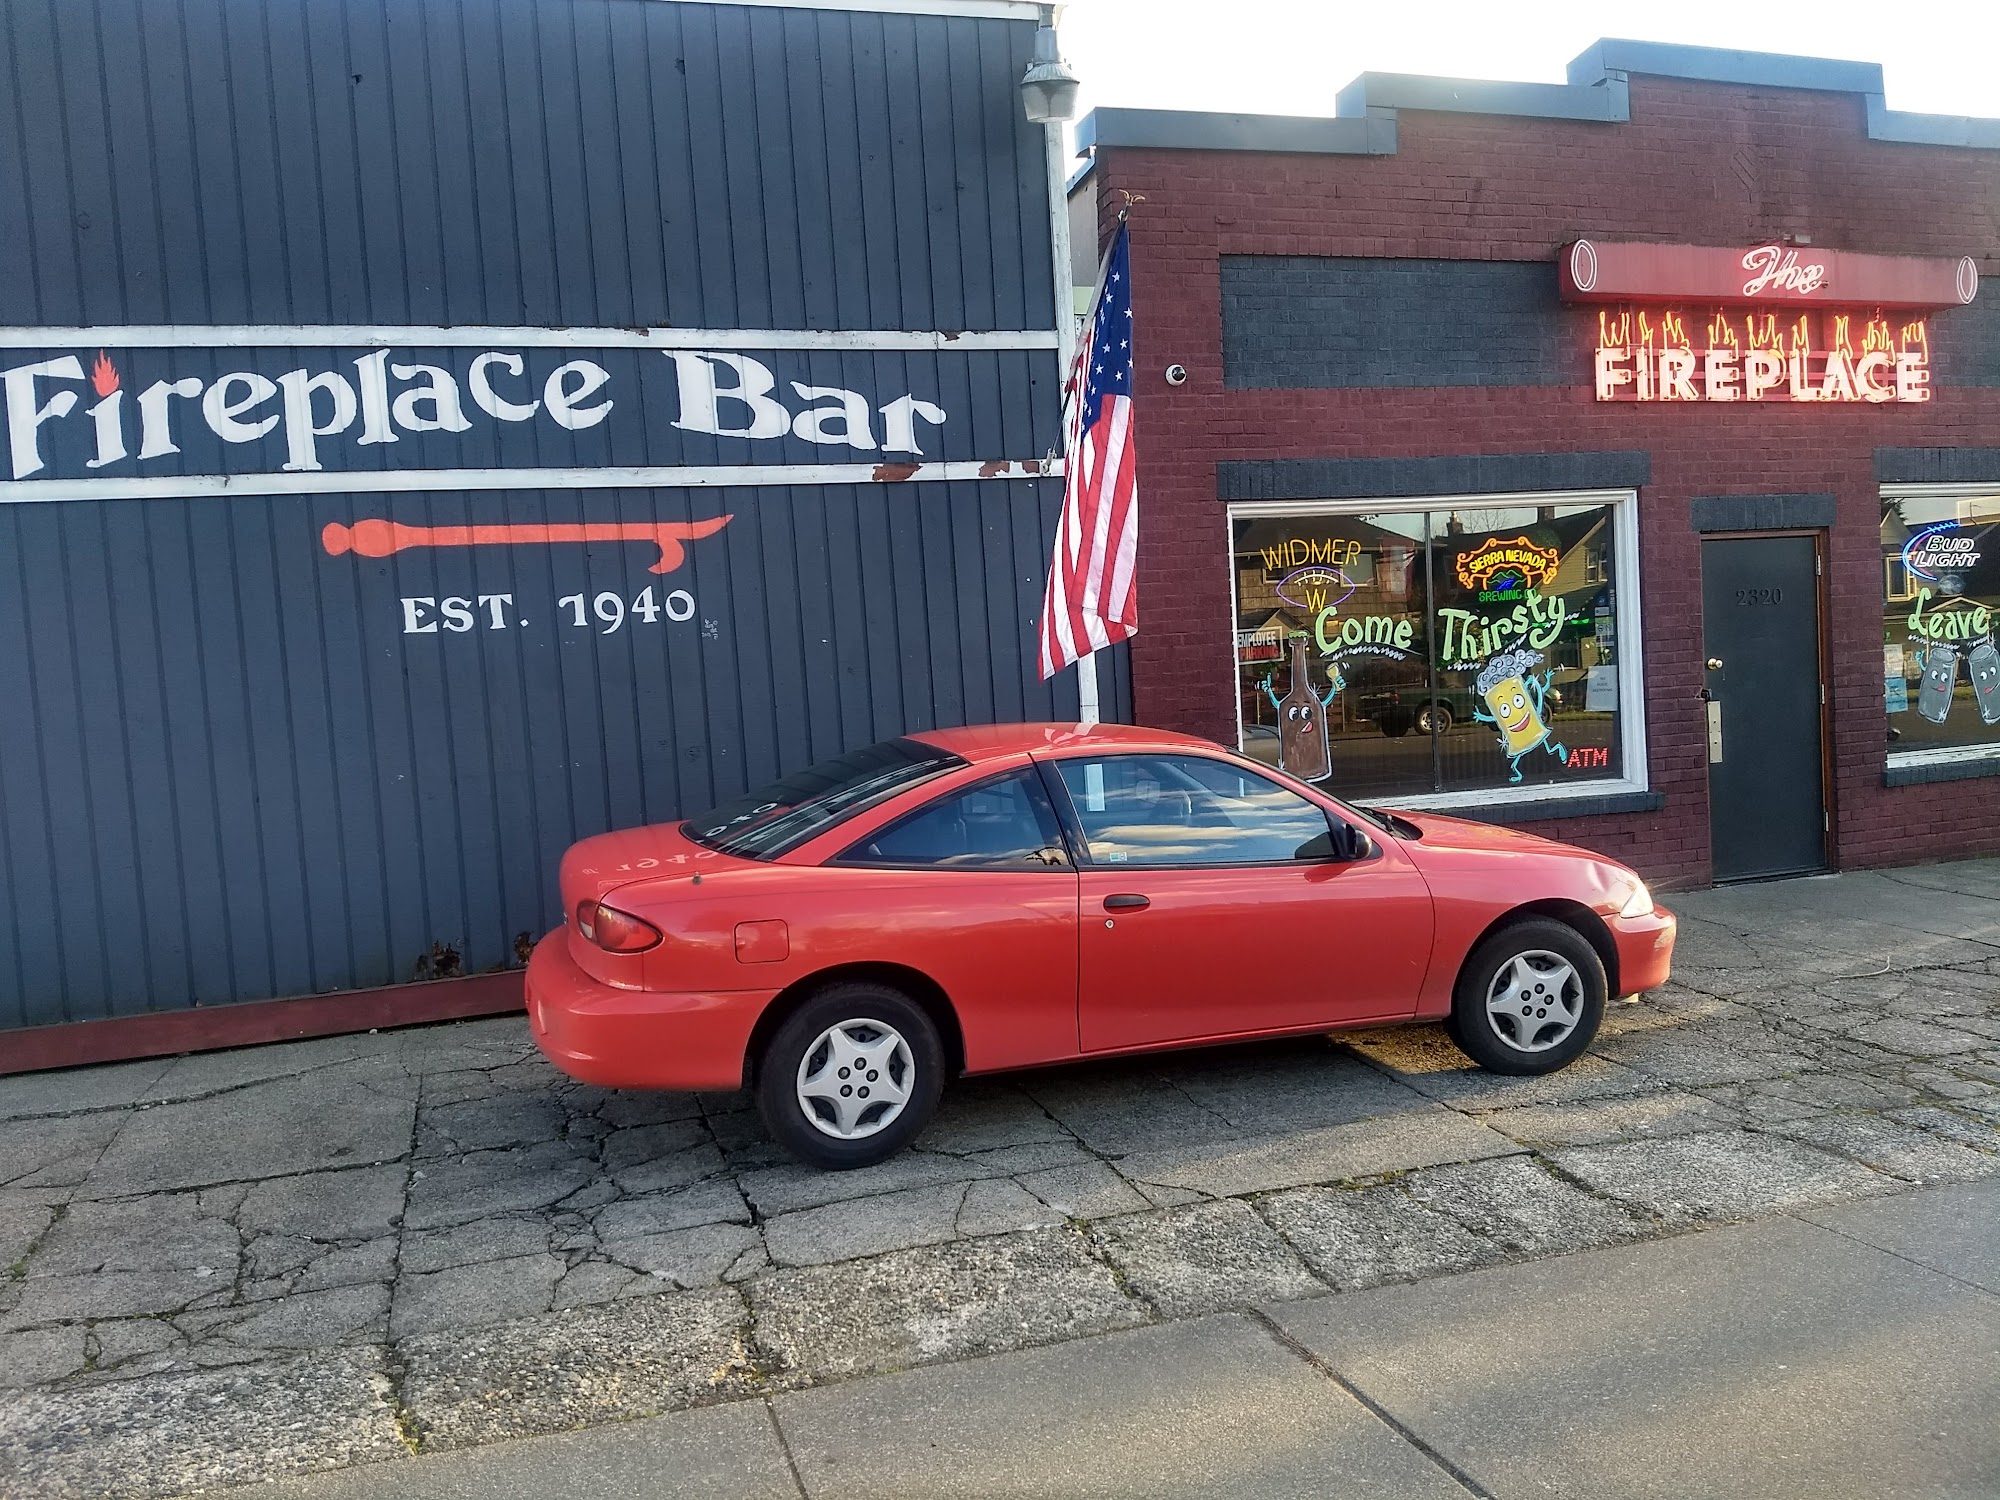 The Fireplace Bar